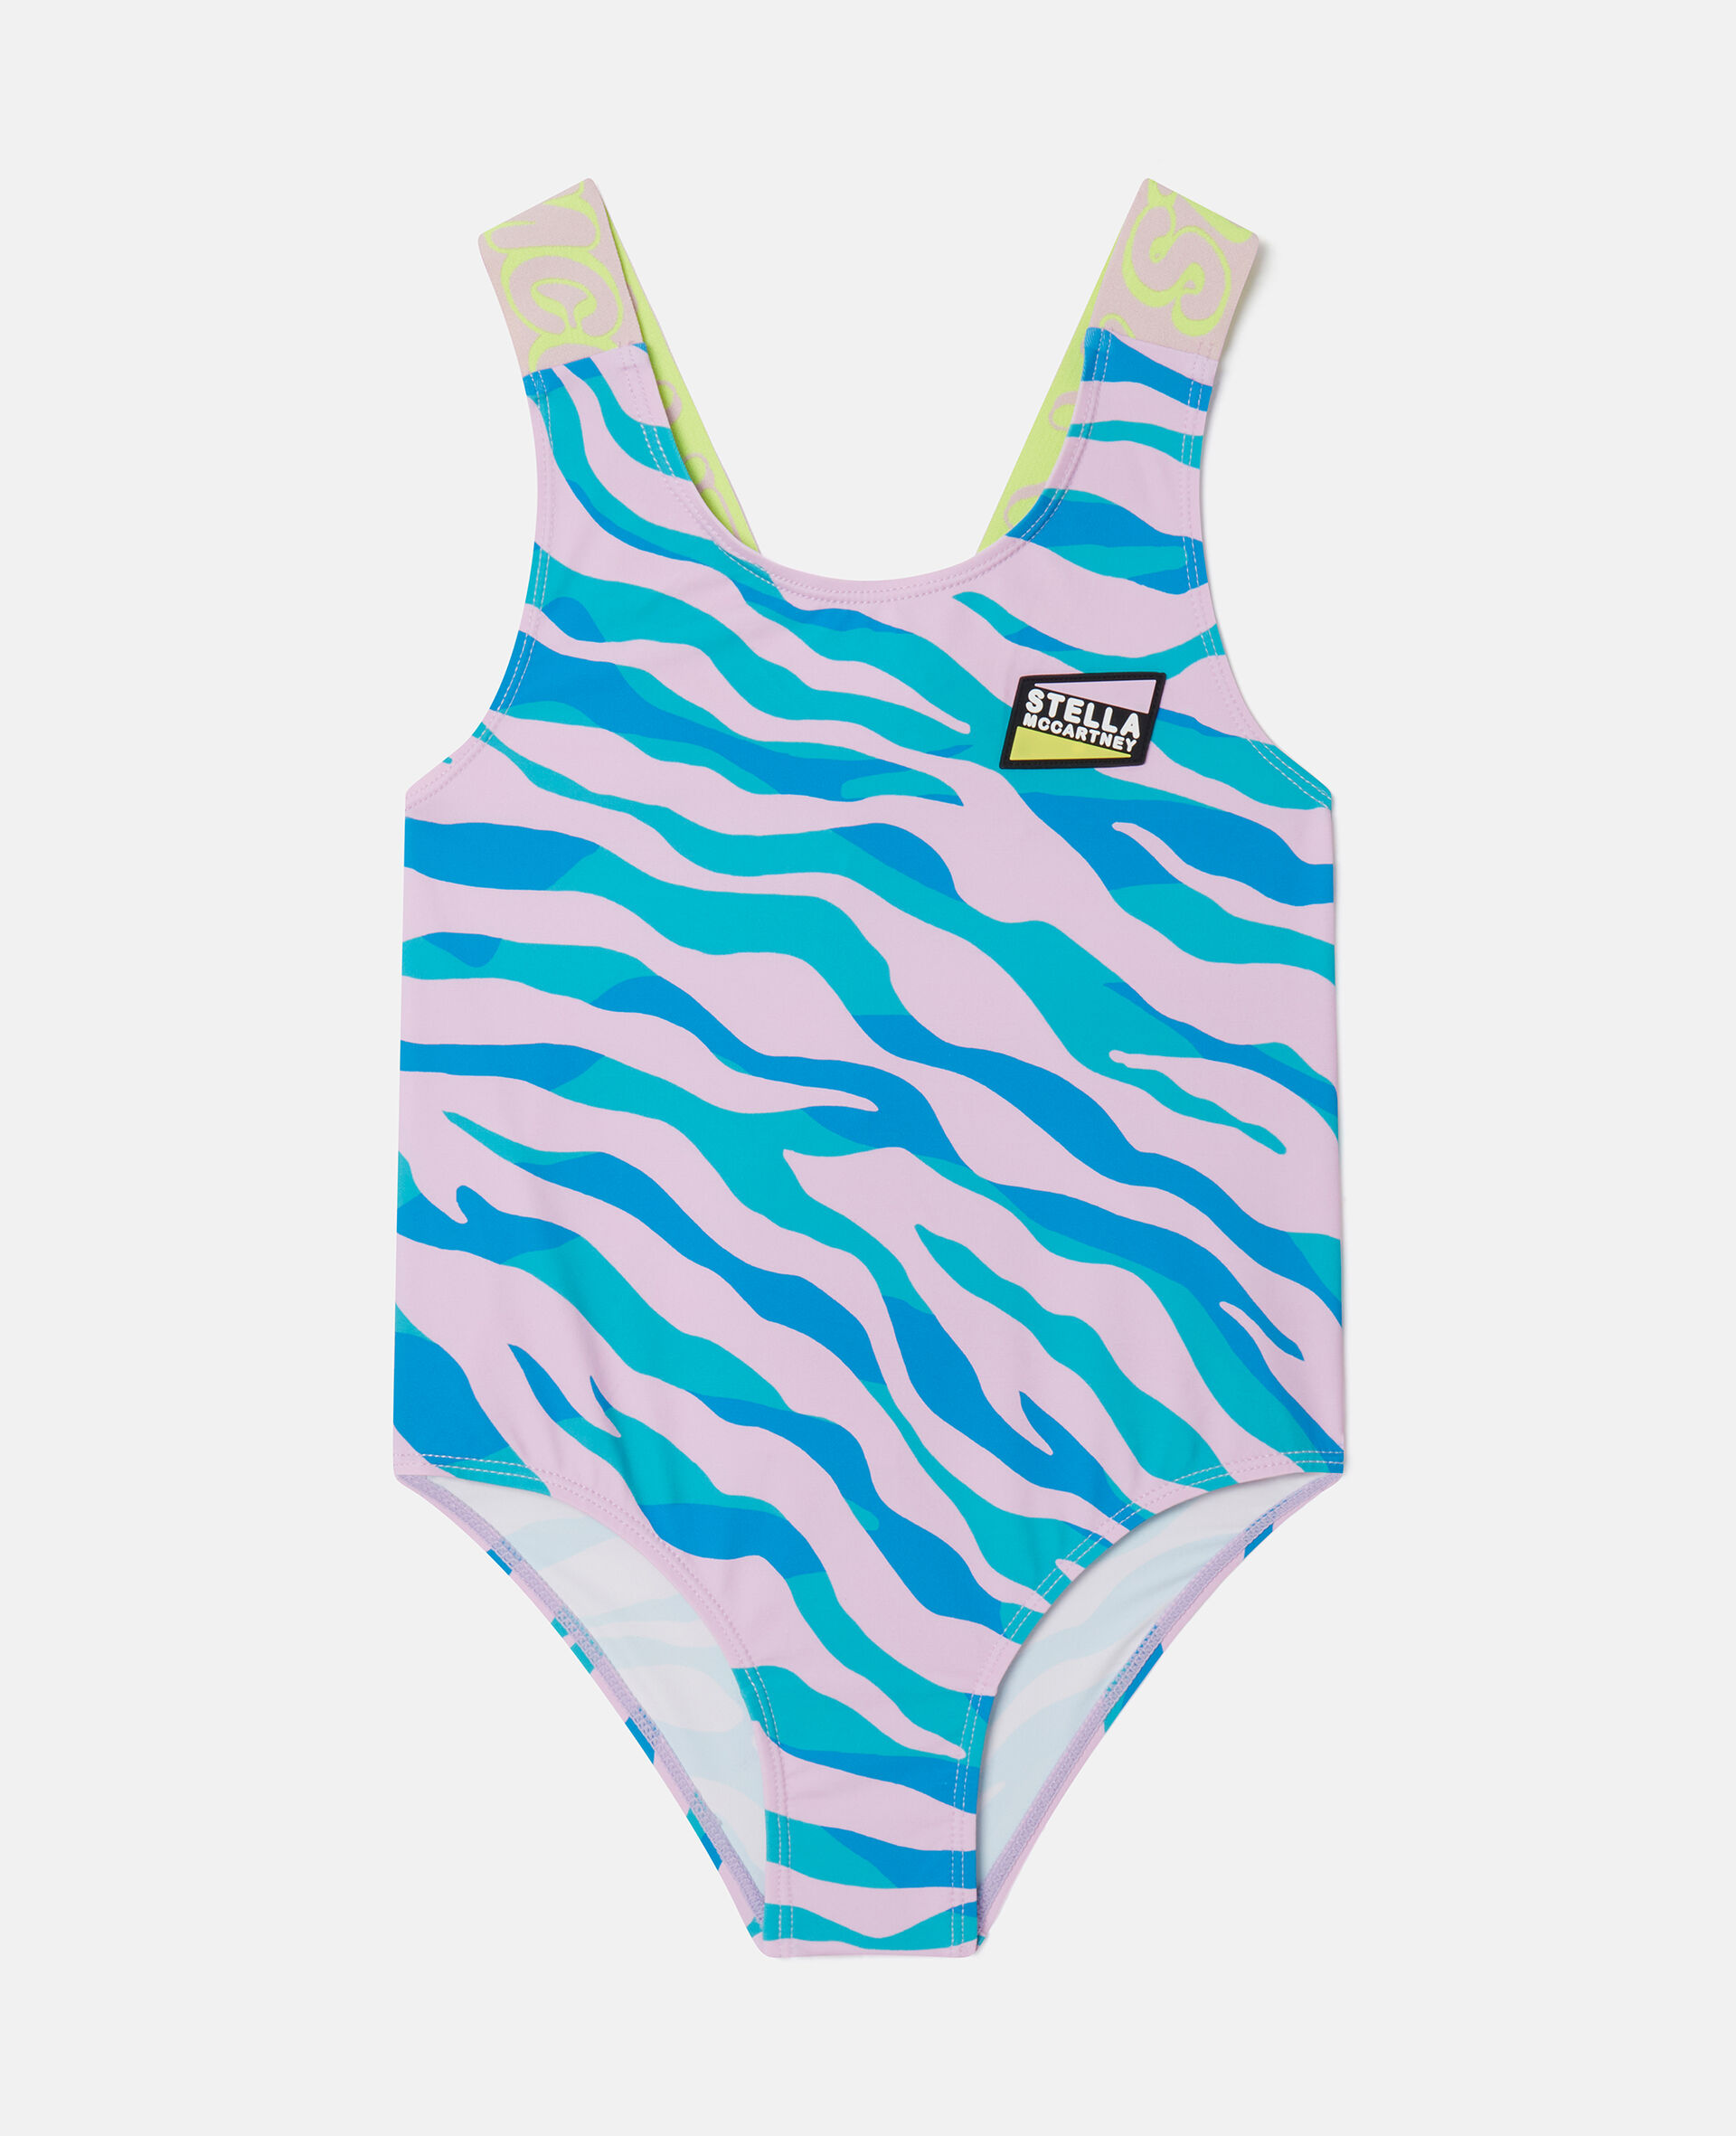 Zebra Print Swimsuit-Fantasia-medium